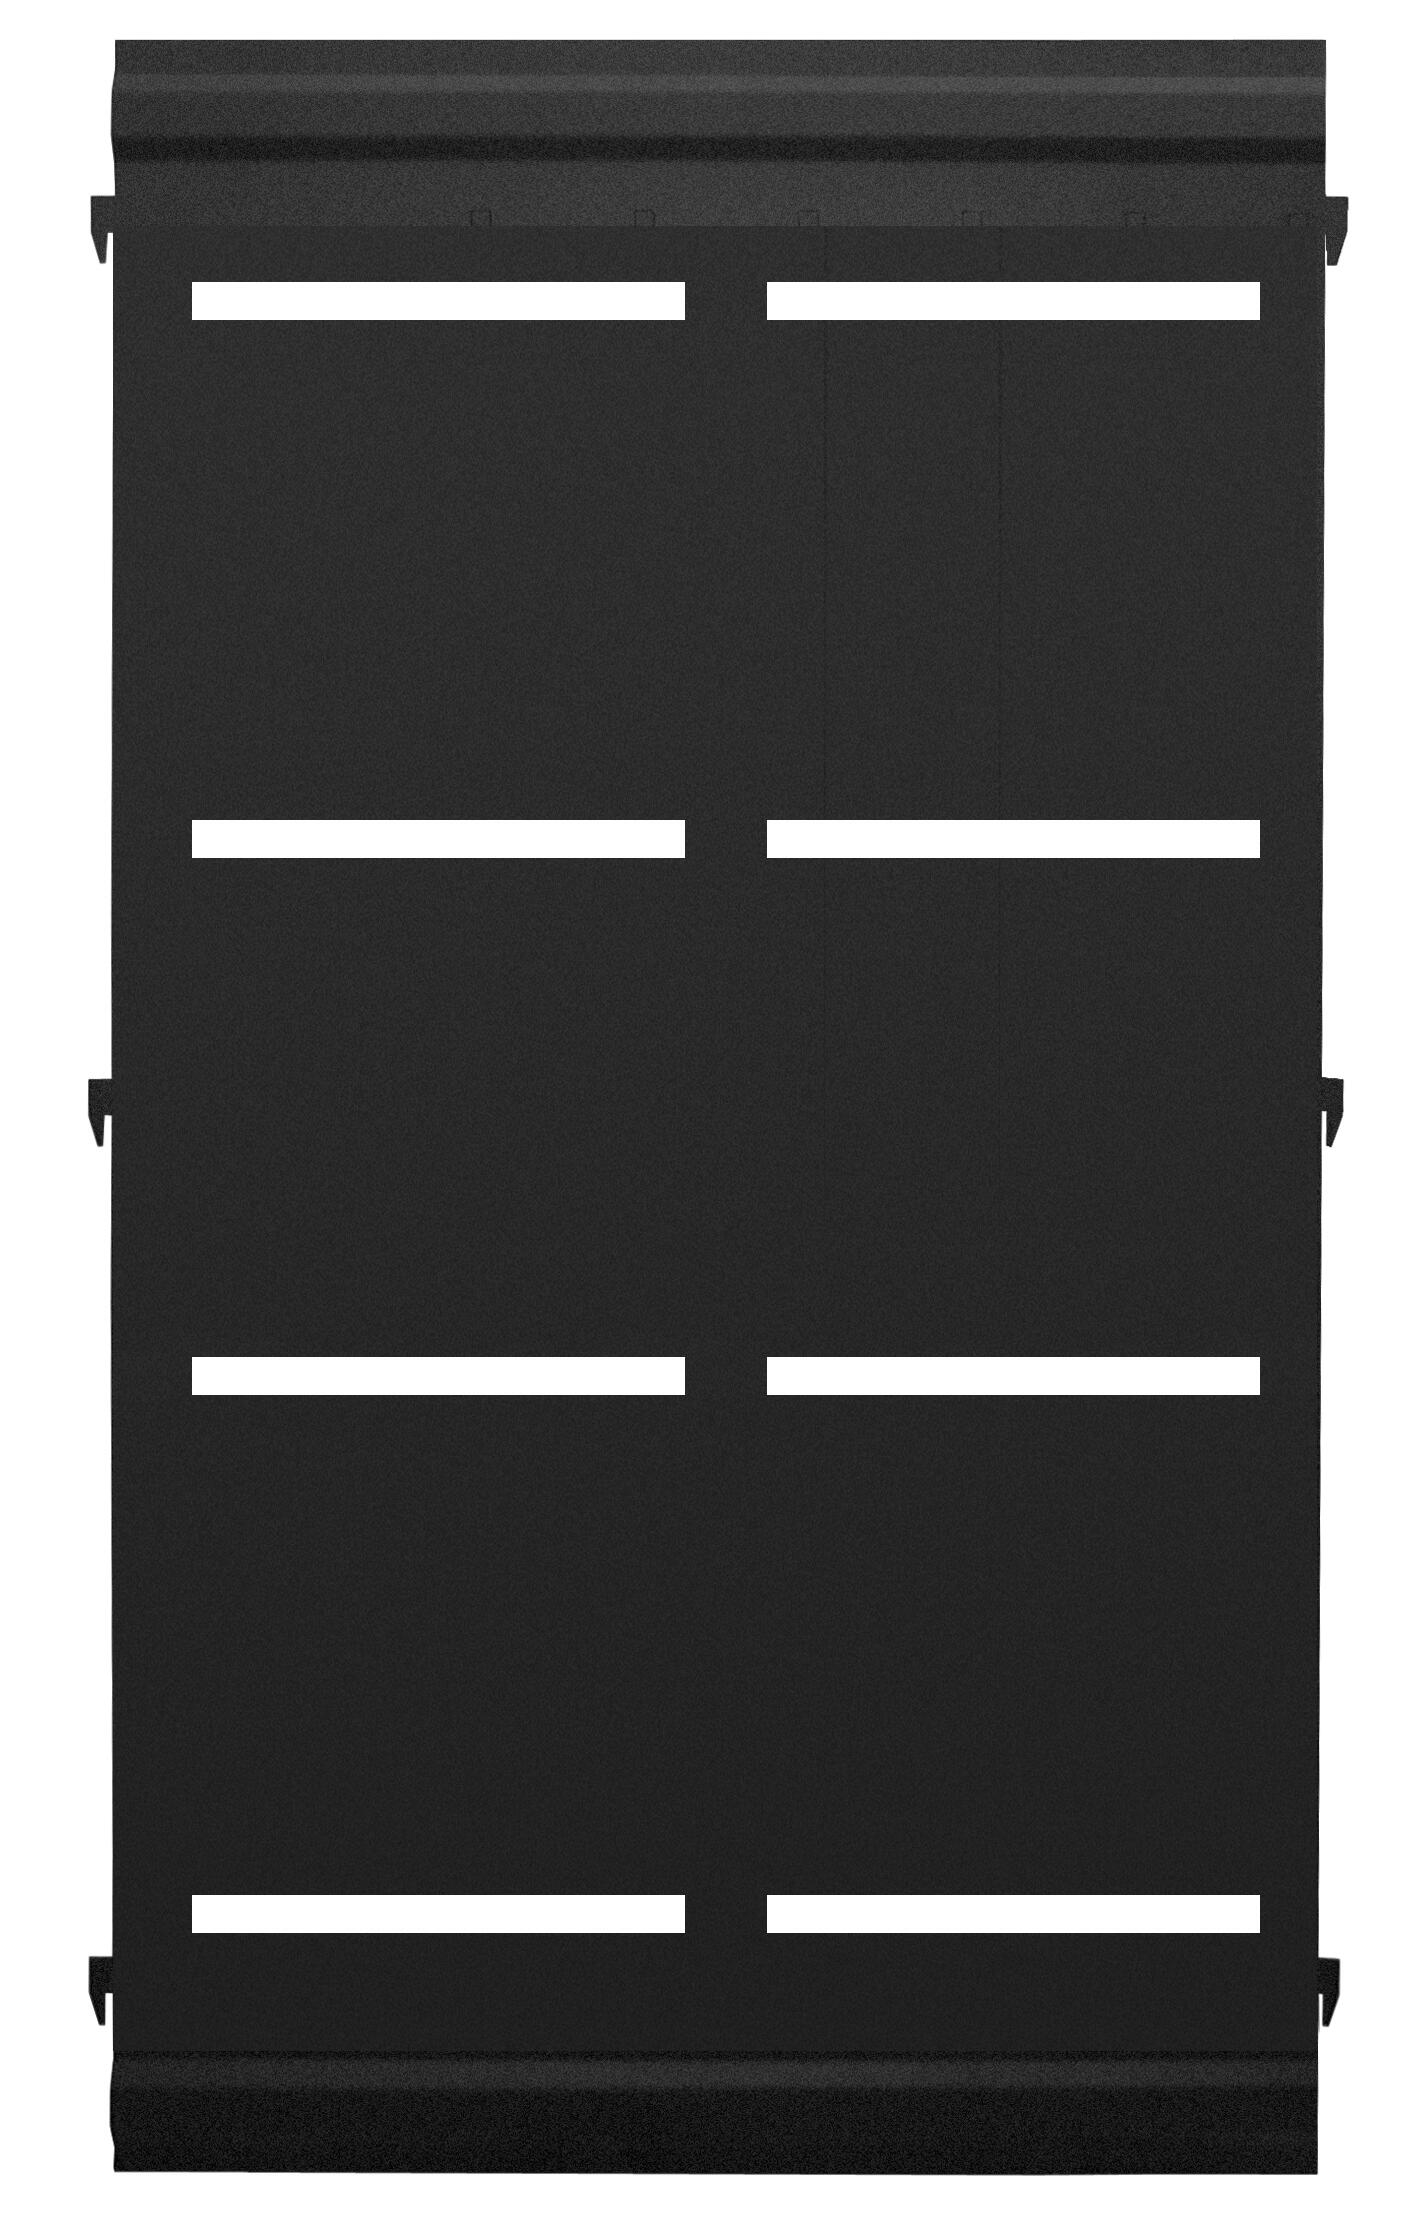 Panel remate valla acero galvanizado franja rayas negro 94x52,5 cm